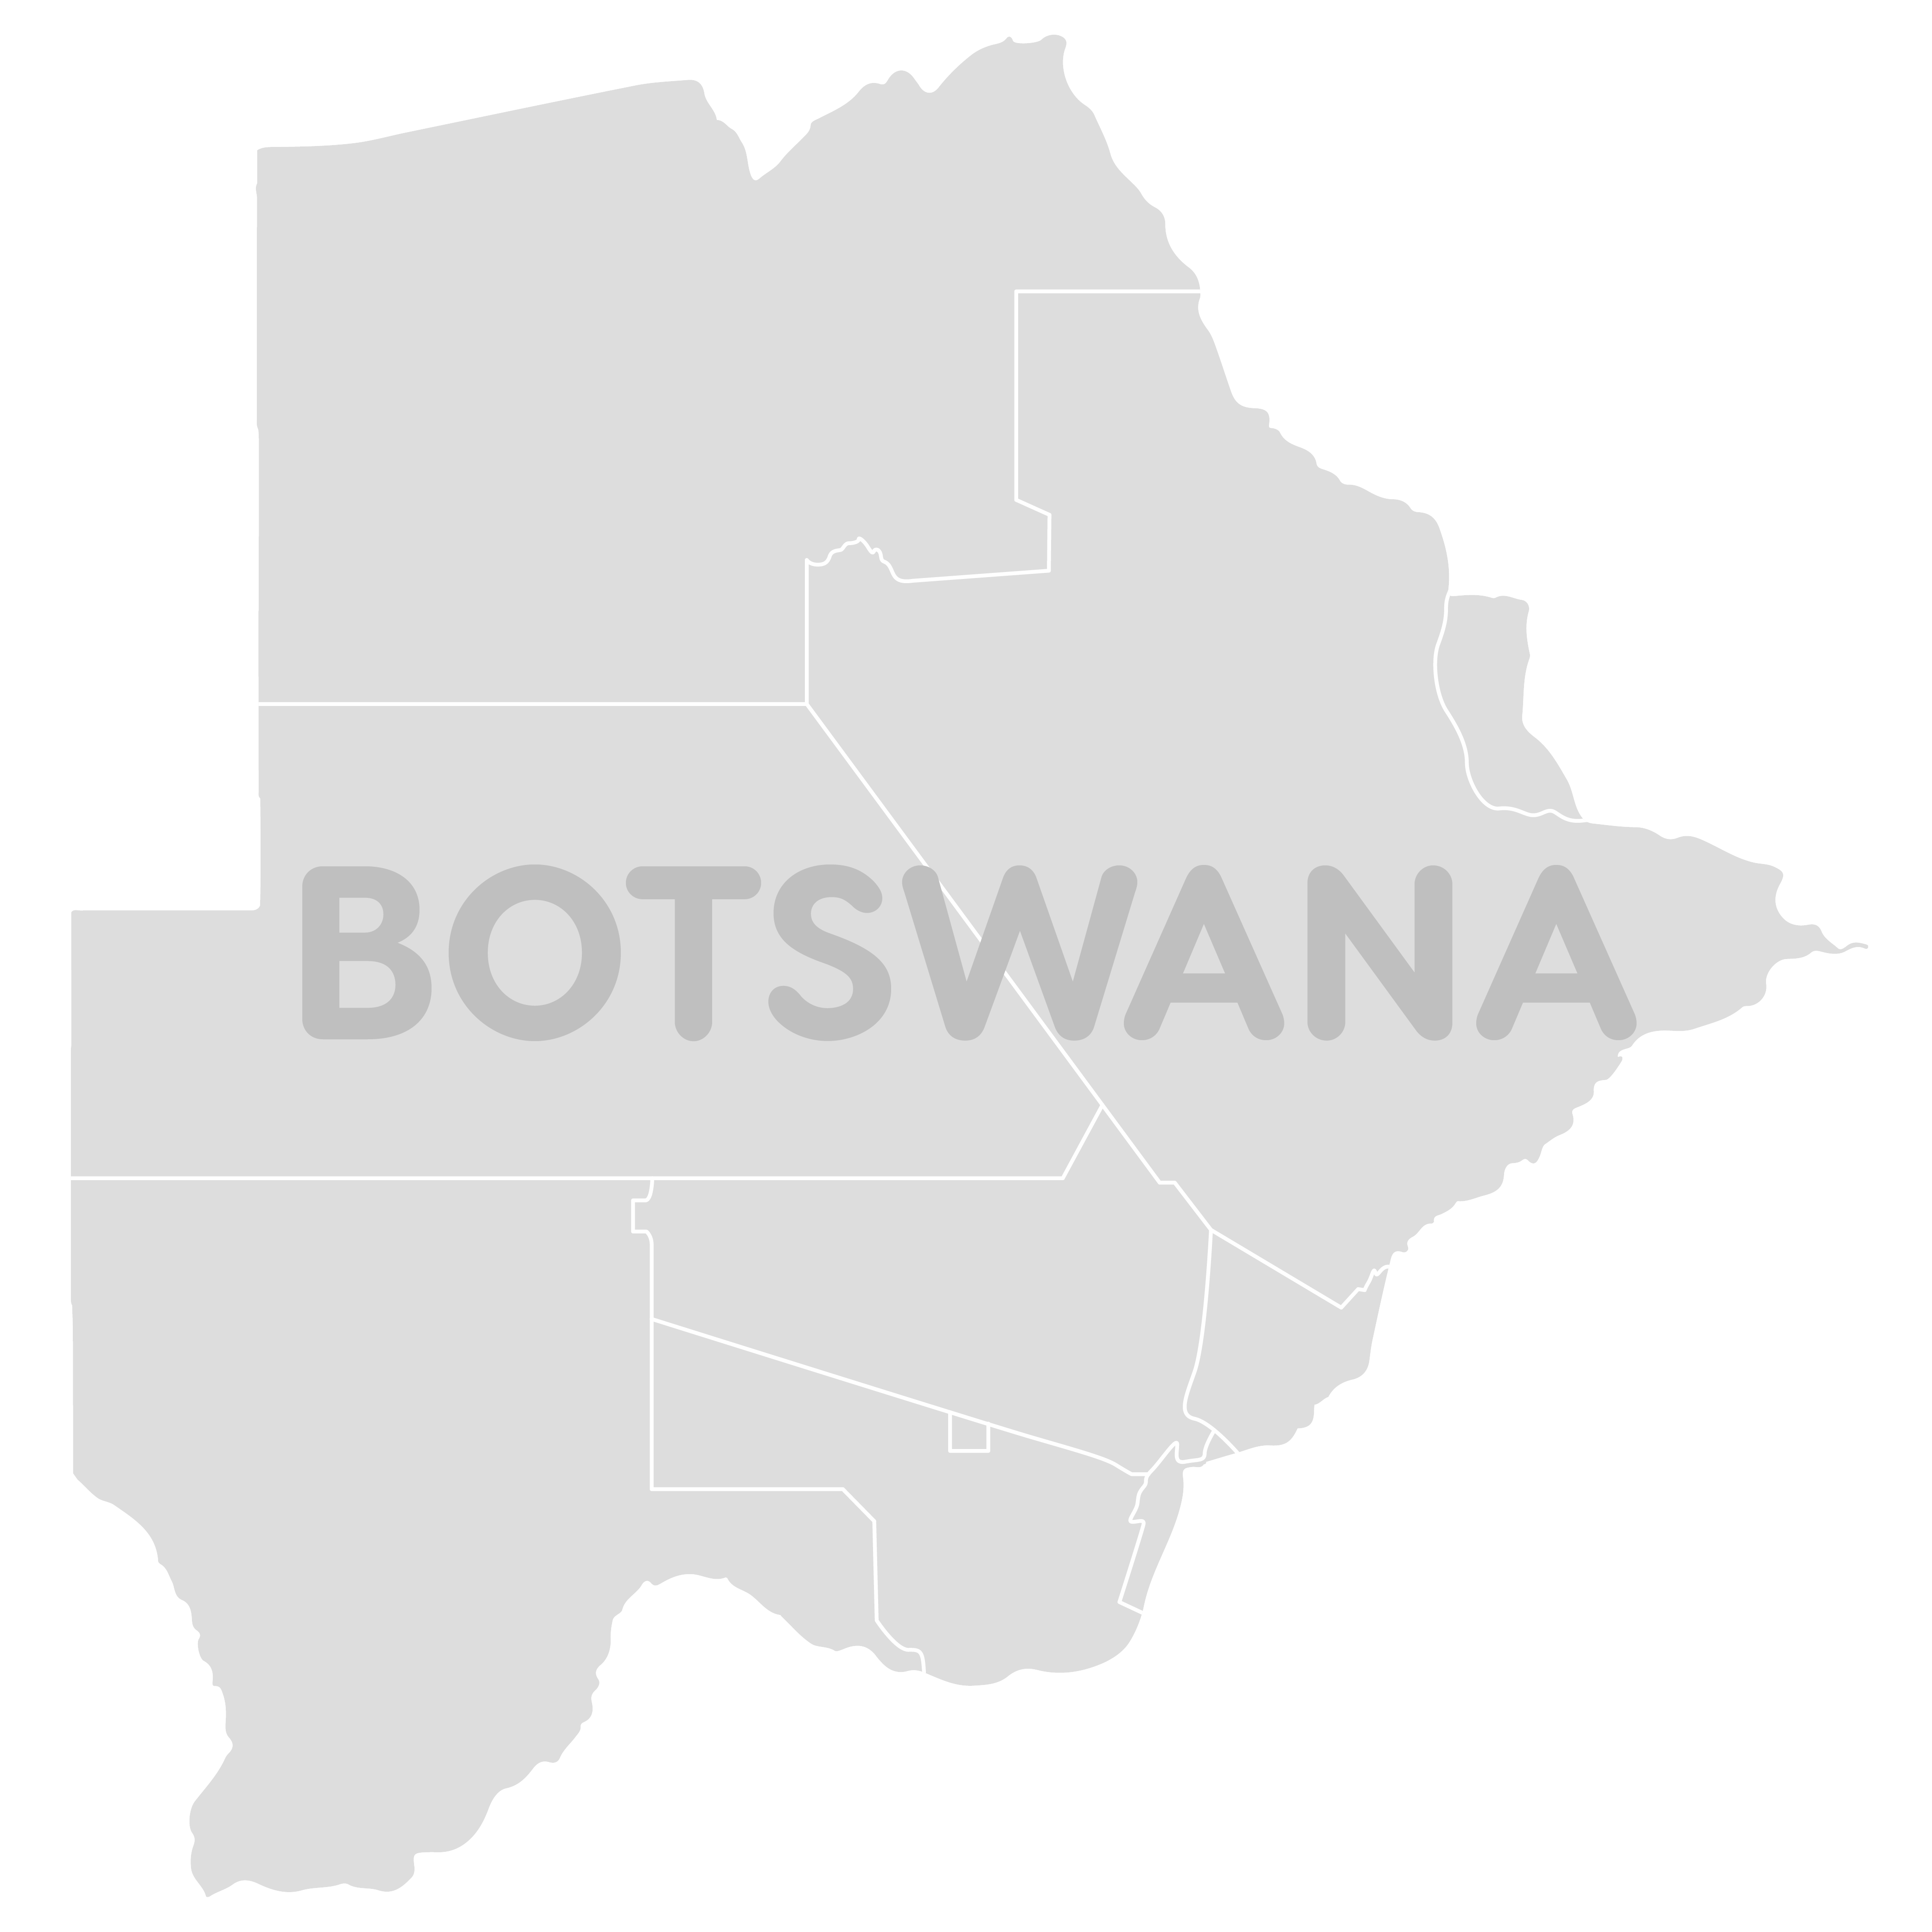 TourSA Botswana Map